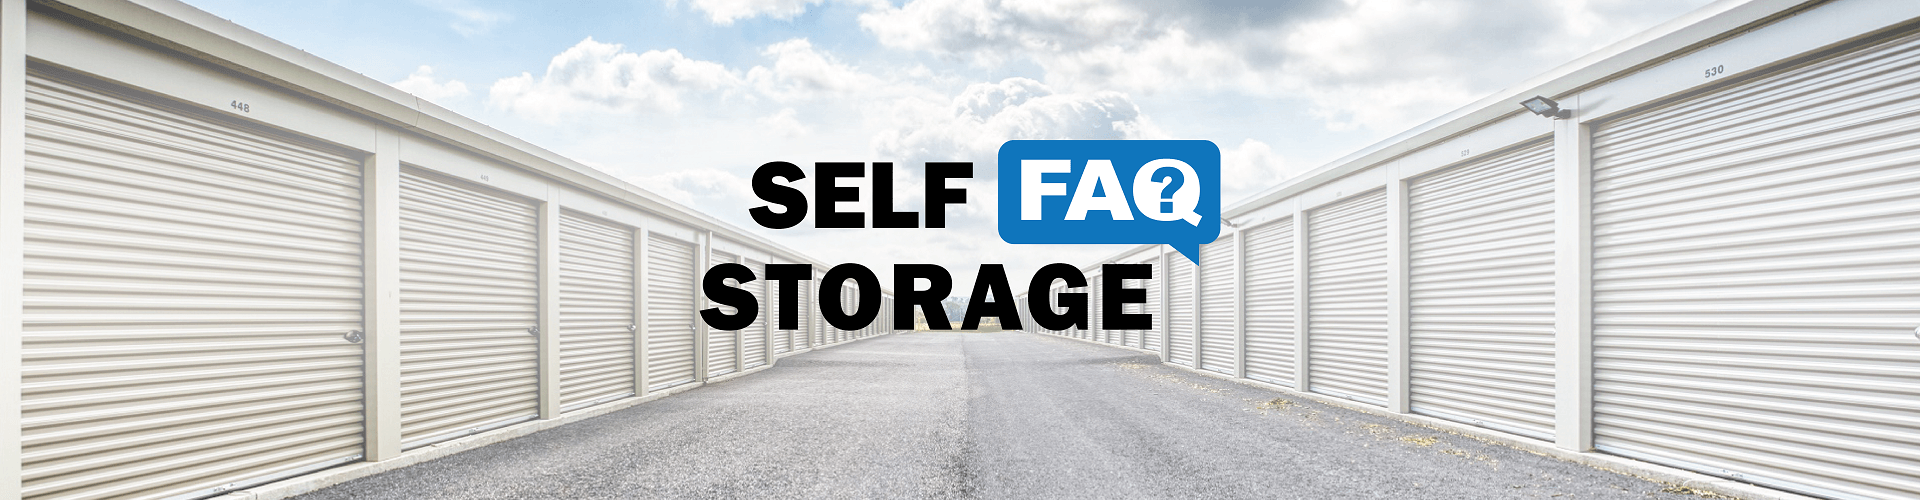 Self Storage FAQ graphic